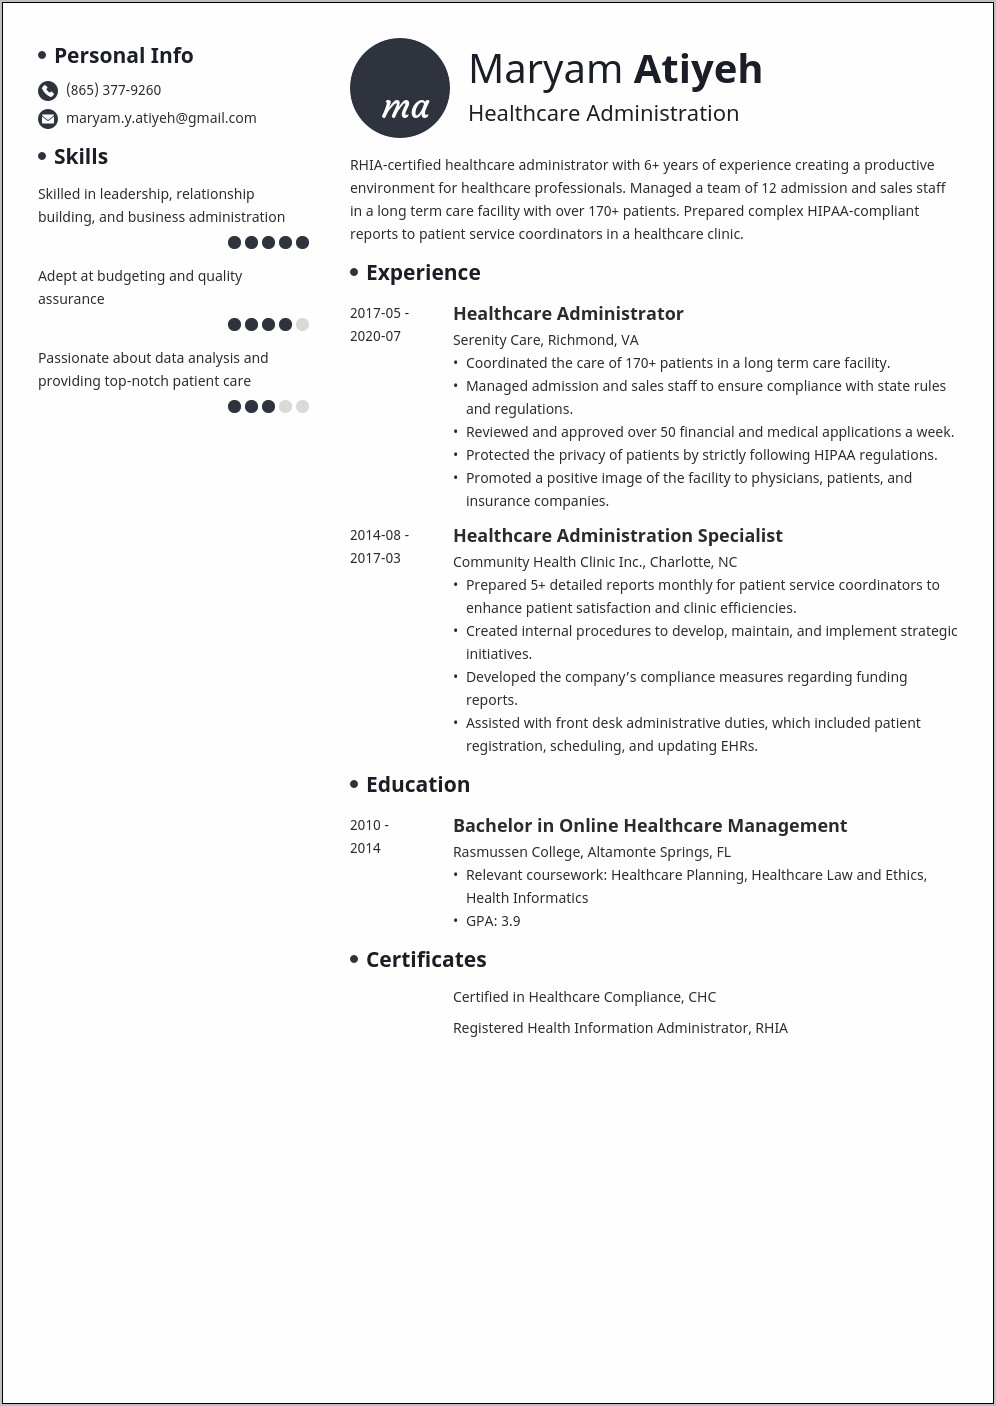 Nurse Manager Resume Site Rasmussen.edu